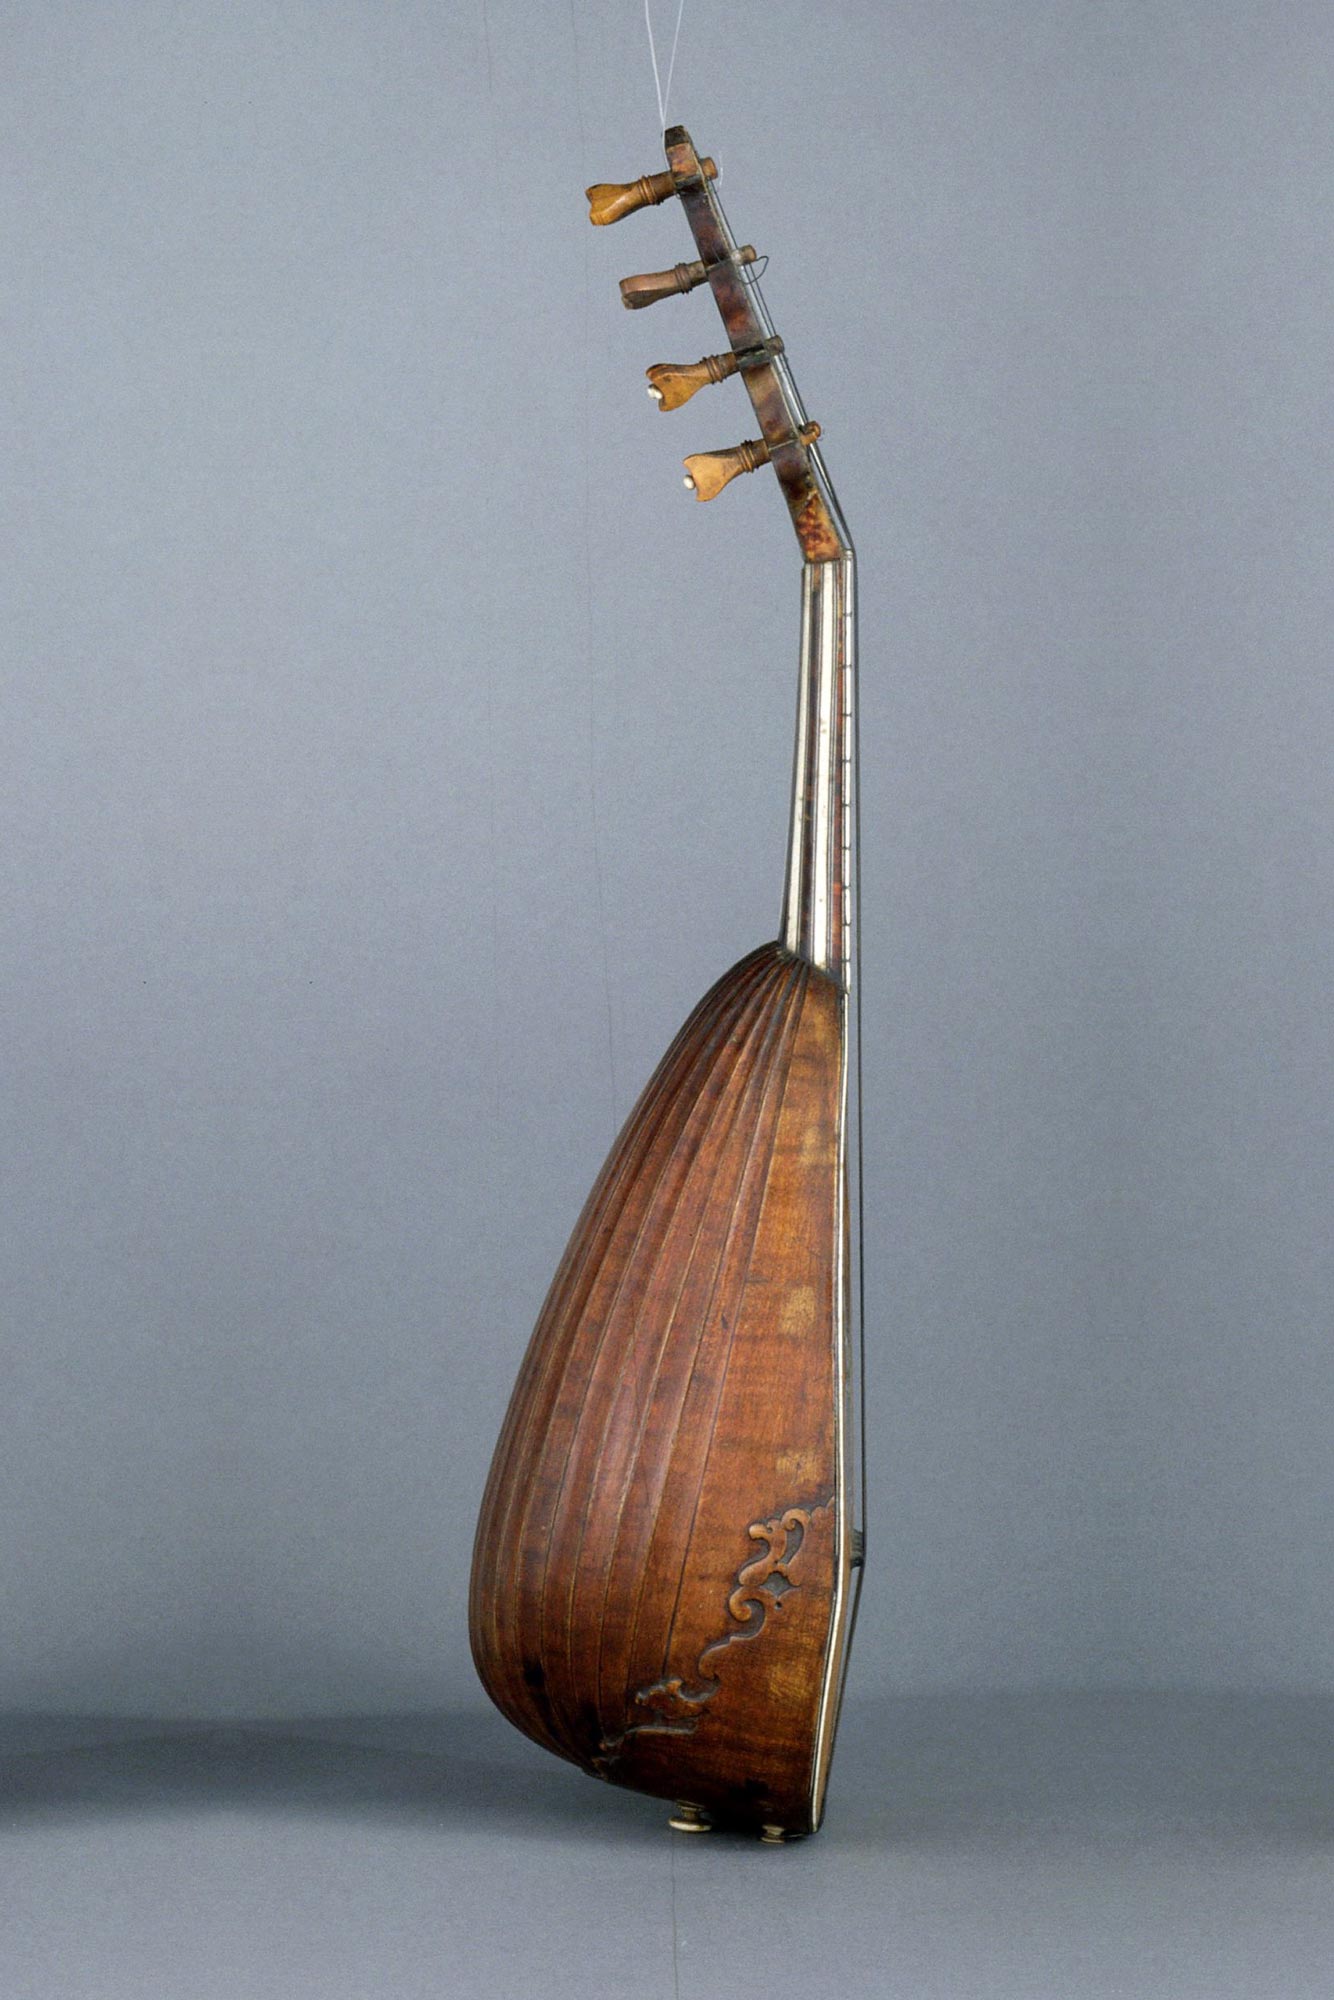 Antonio Vinaccia, mandoline, fin XVIIIème siècle, Musée de la Musique